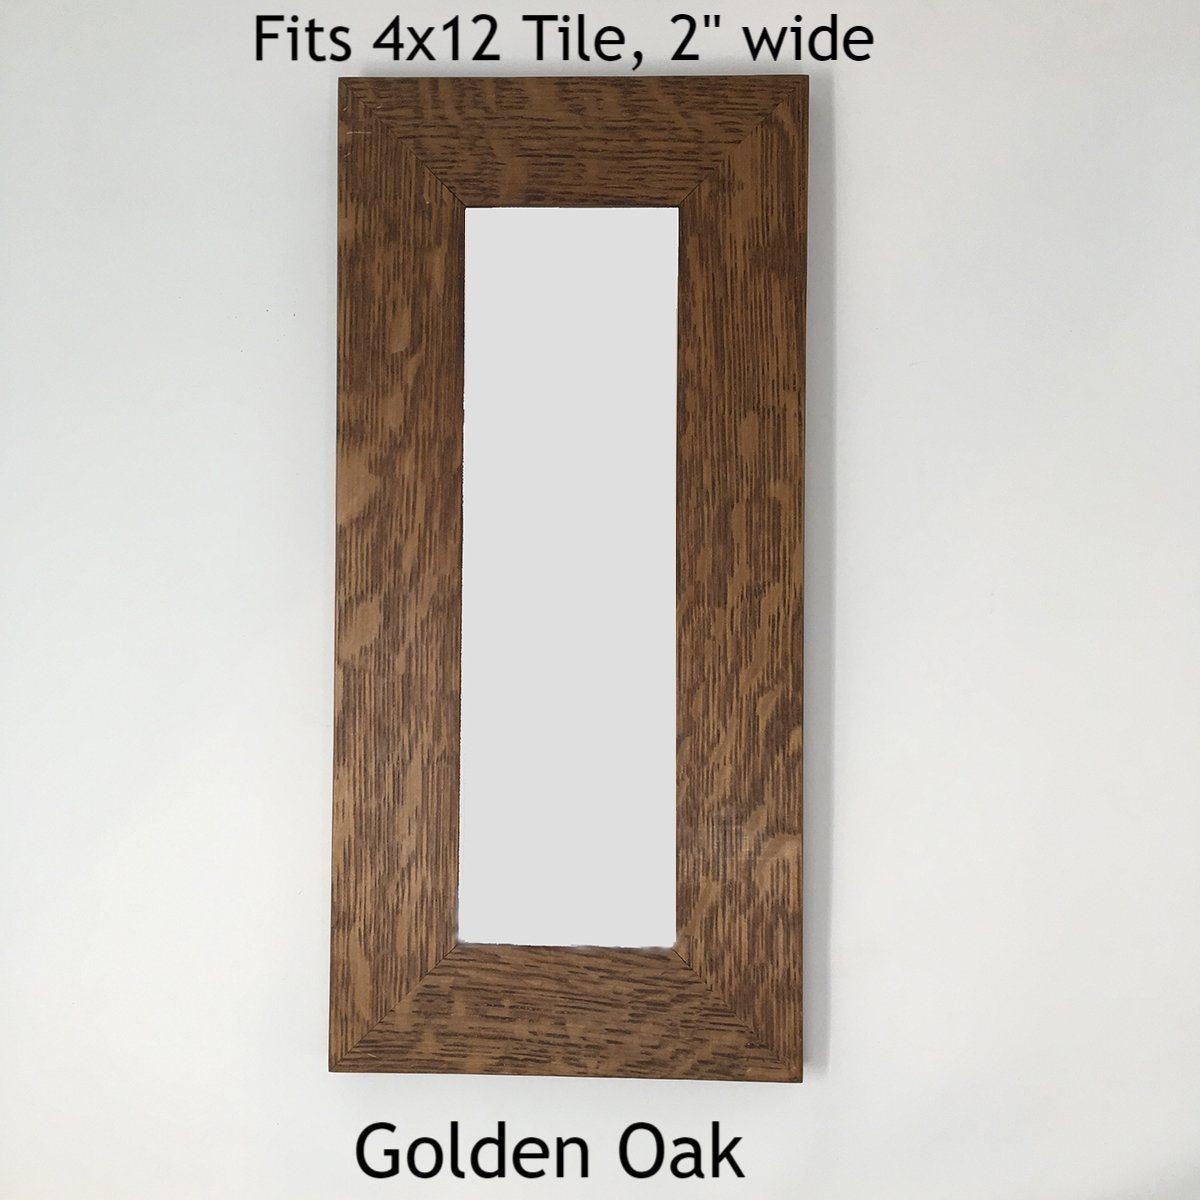 Single Tile Frame Tile Family Woodworks 